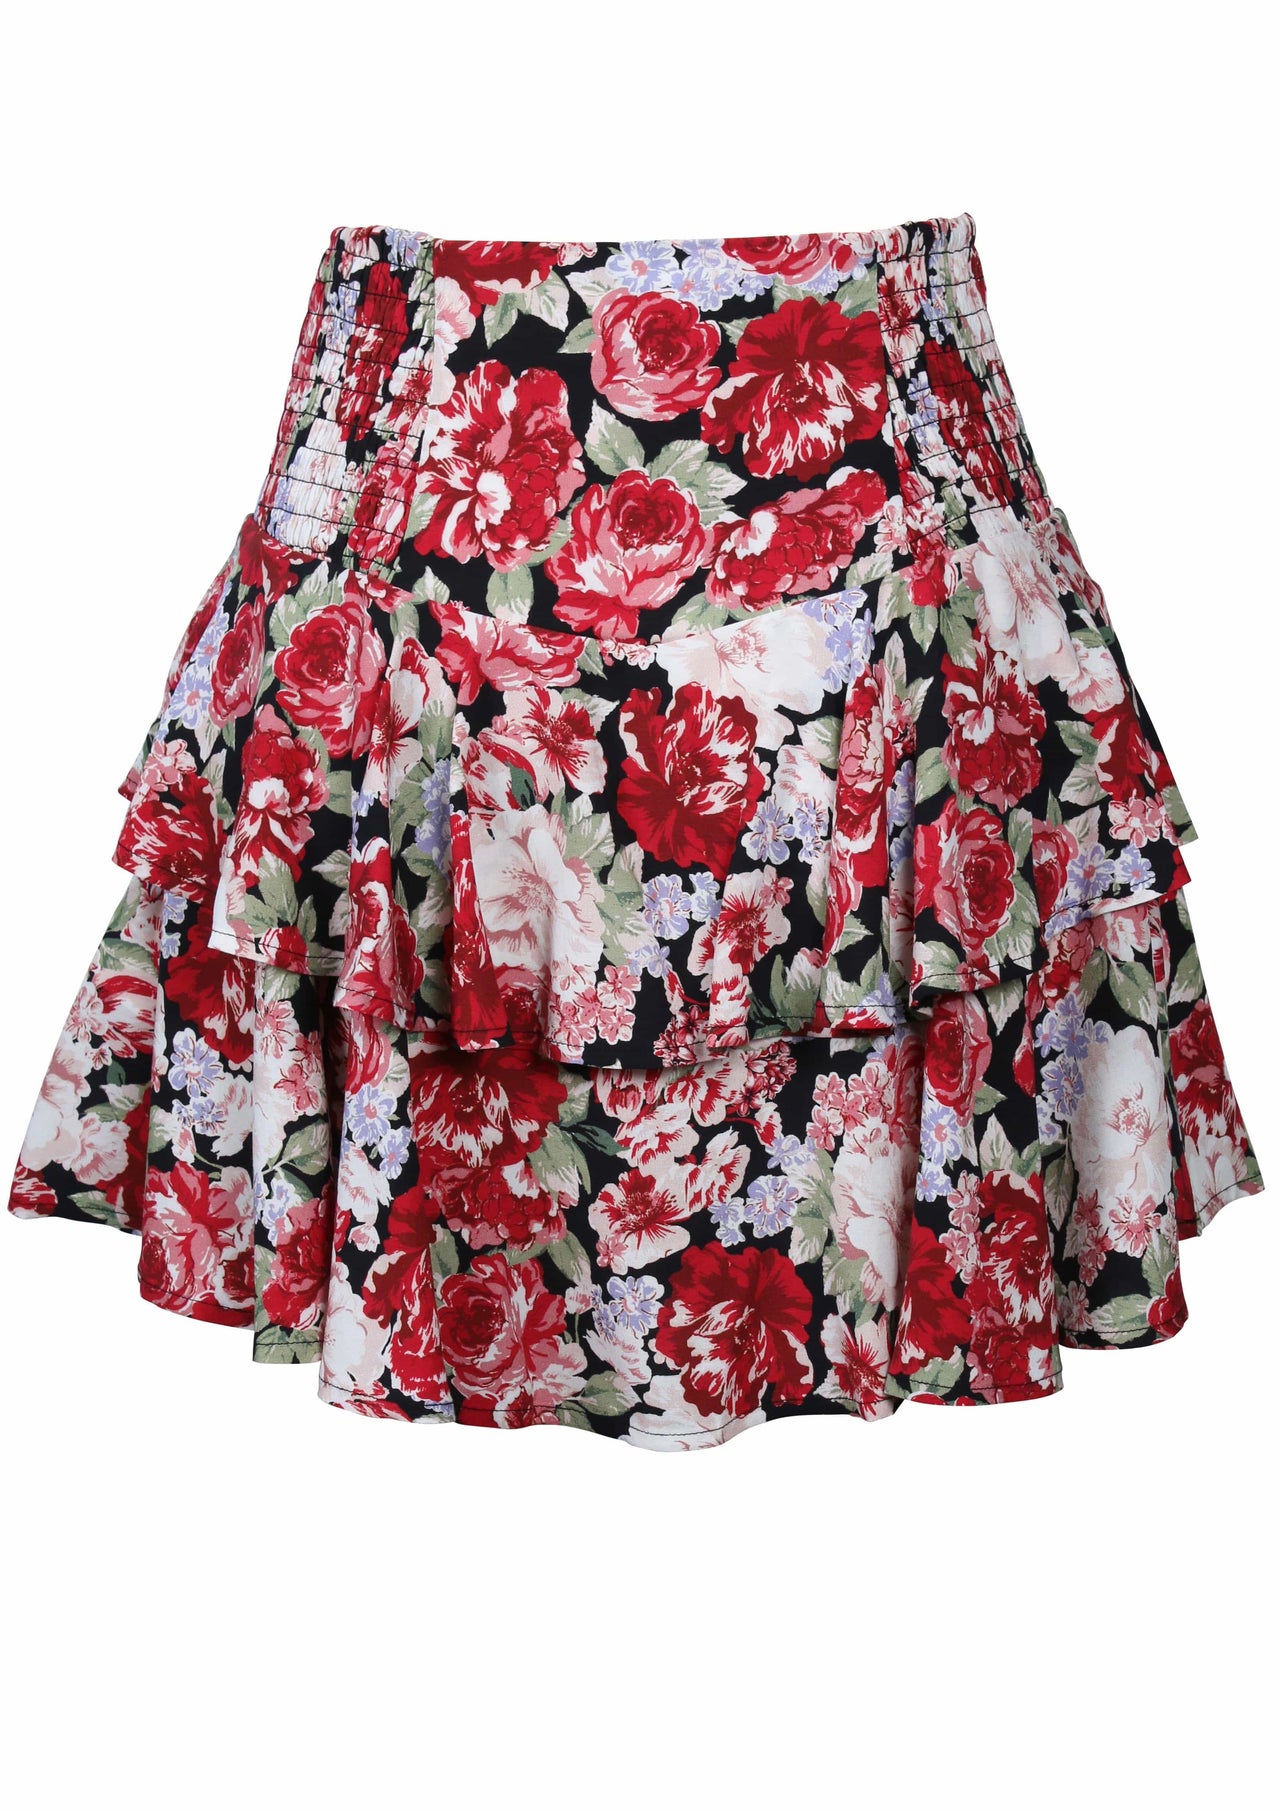 Kind Words Mini Skirt Multi, Mini Skirt by Mink Pink | LIT Boutique